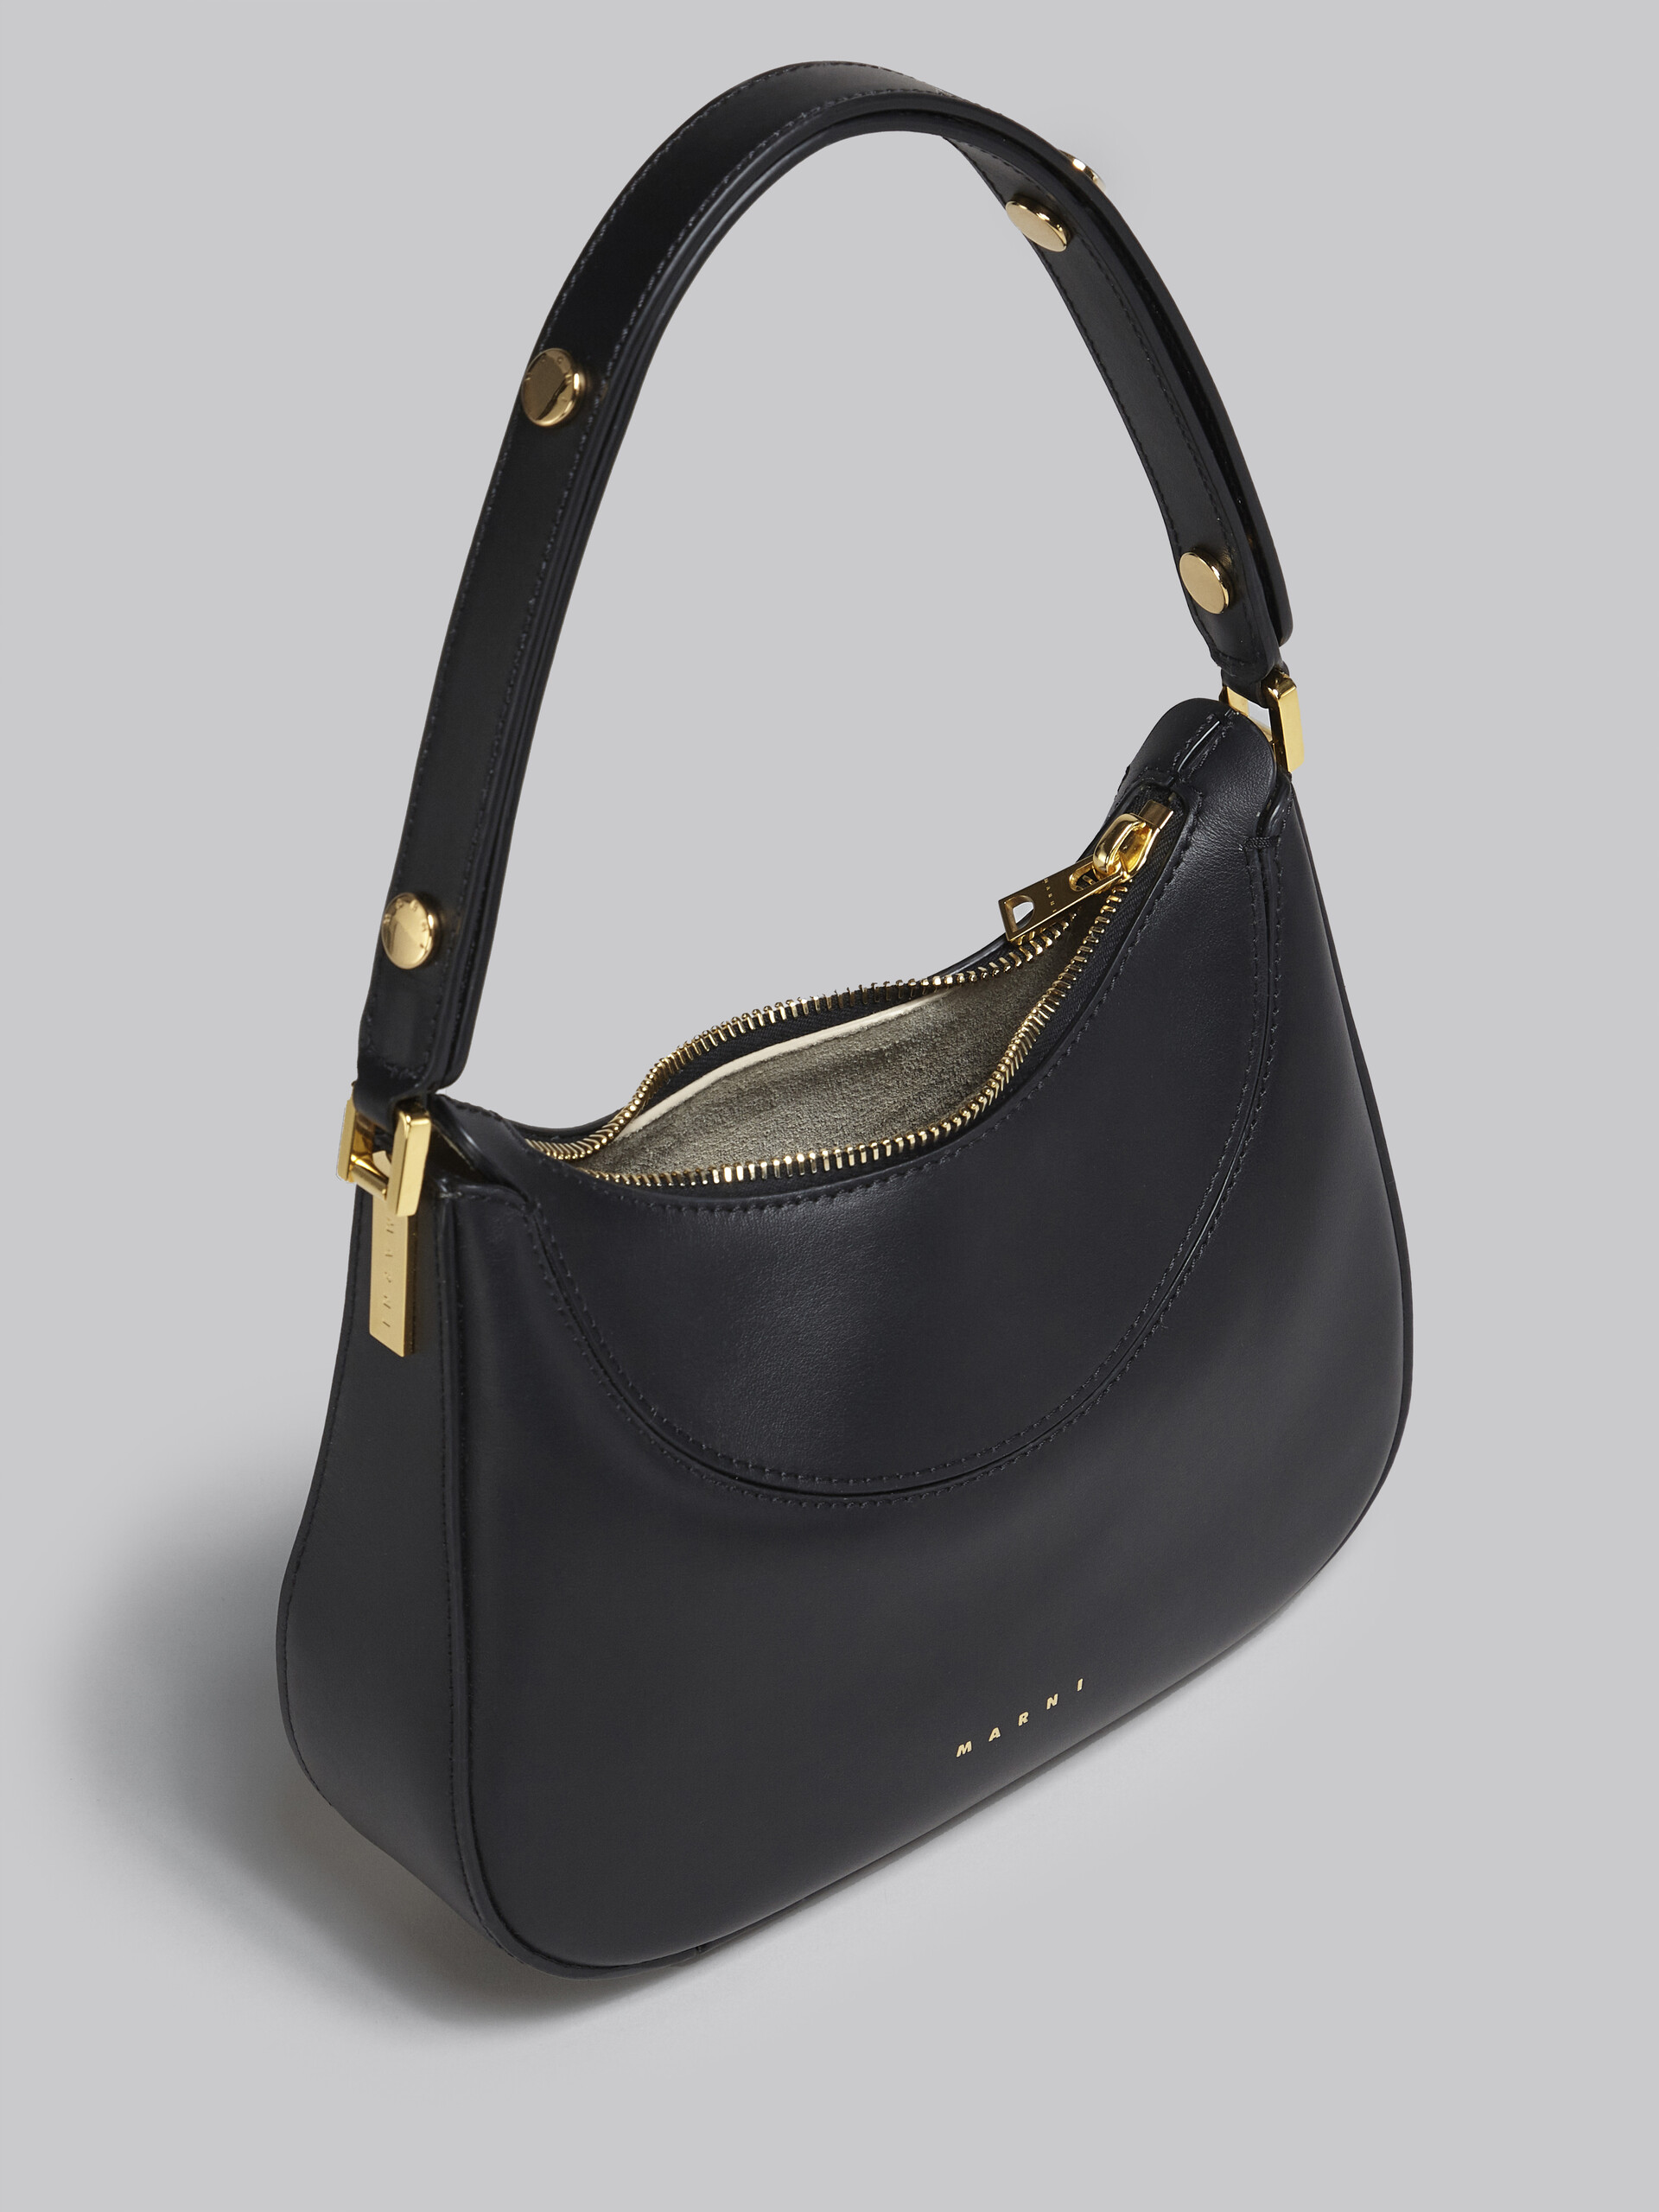 Milano mini bag in black leather - Handbags - Image 4